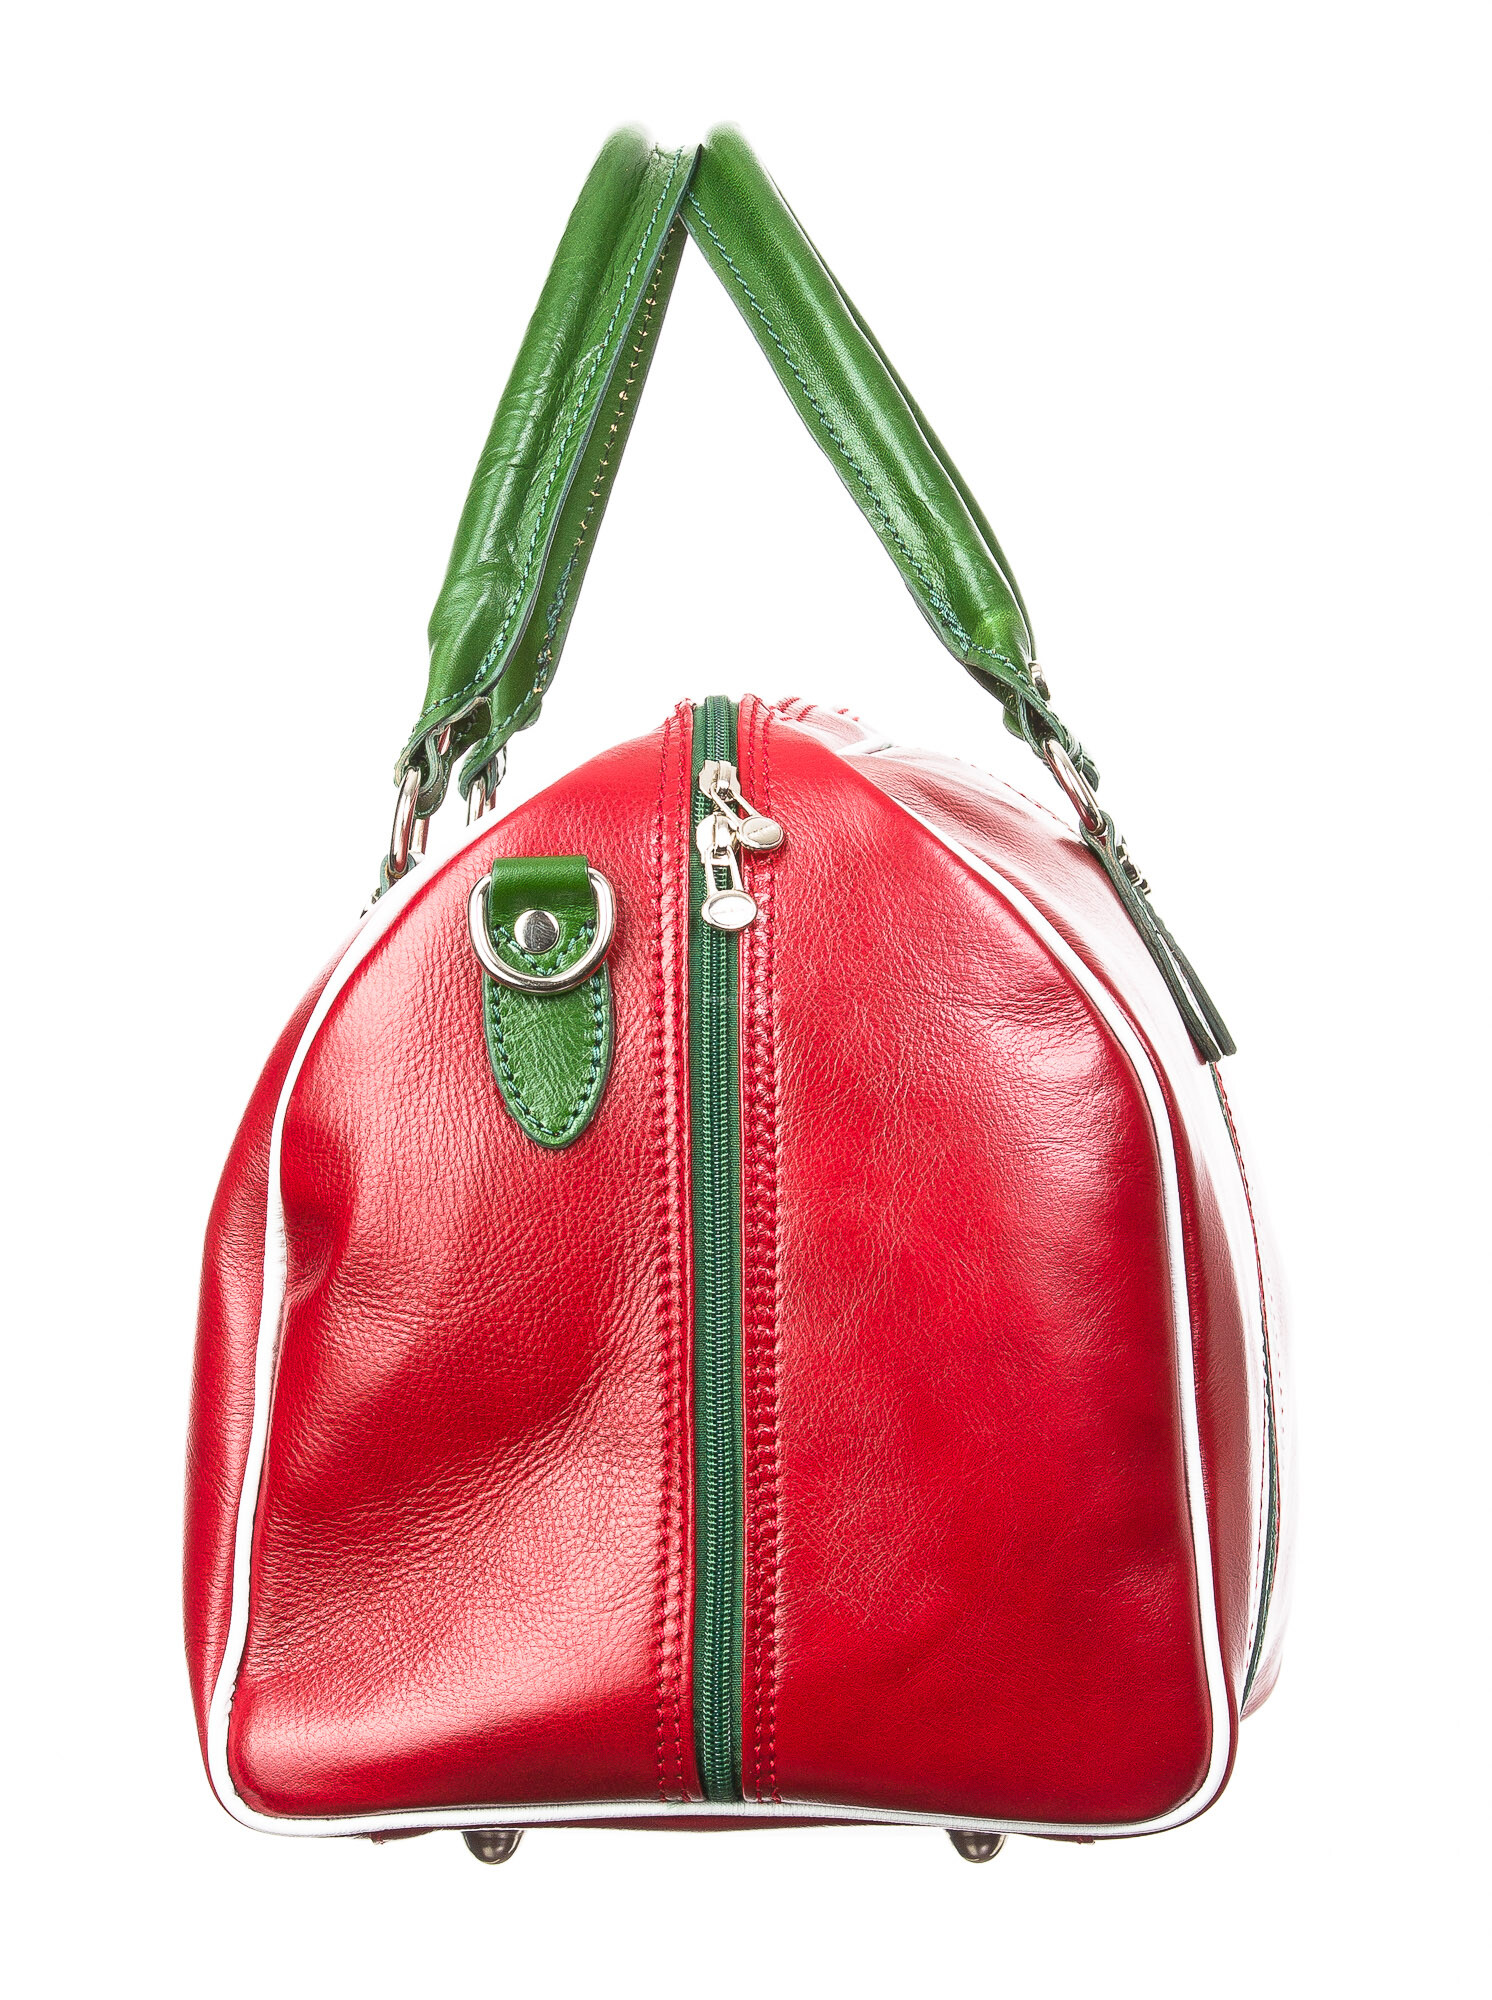 CATANZARO- Unisex handmade genuine leather travel bag with italian flag big  size